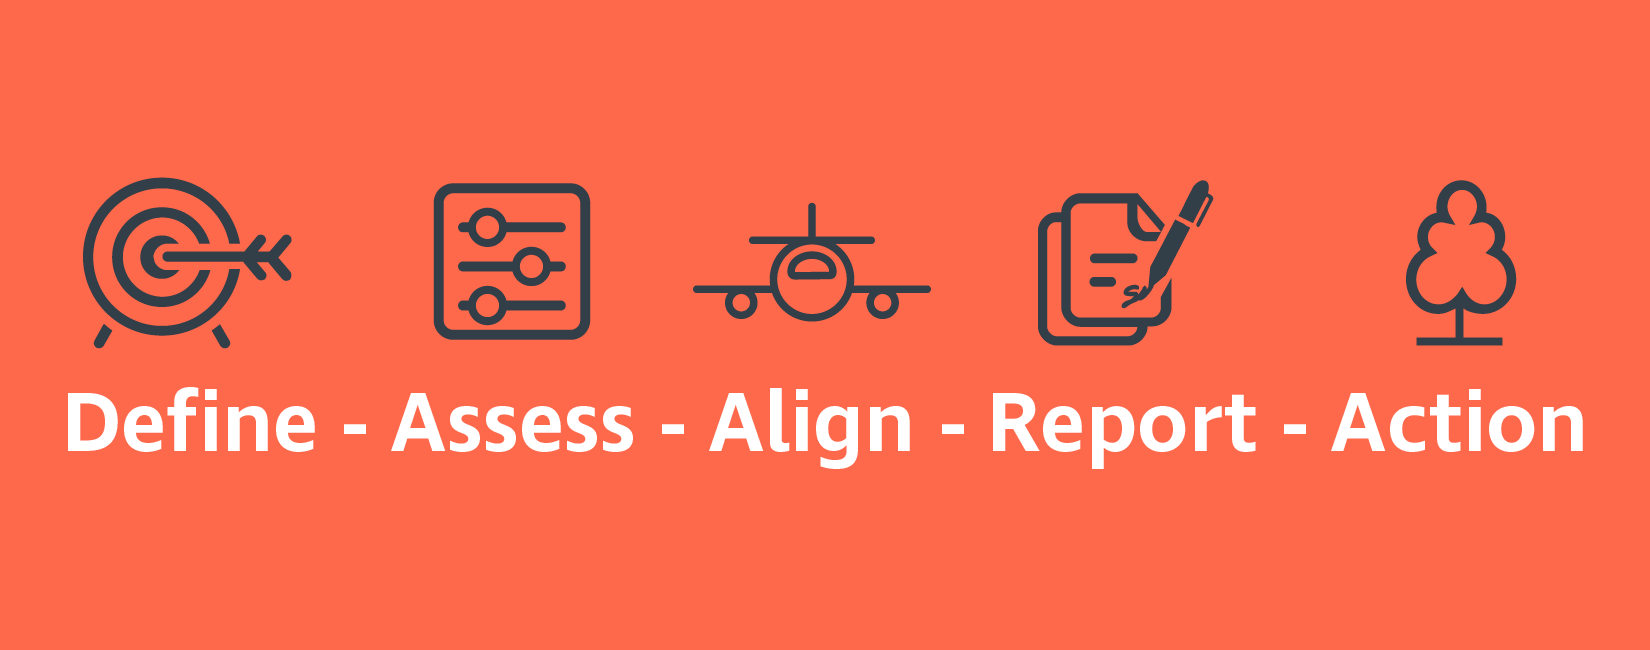 Define - Assess - Align - Report - Action